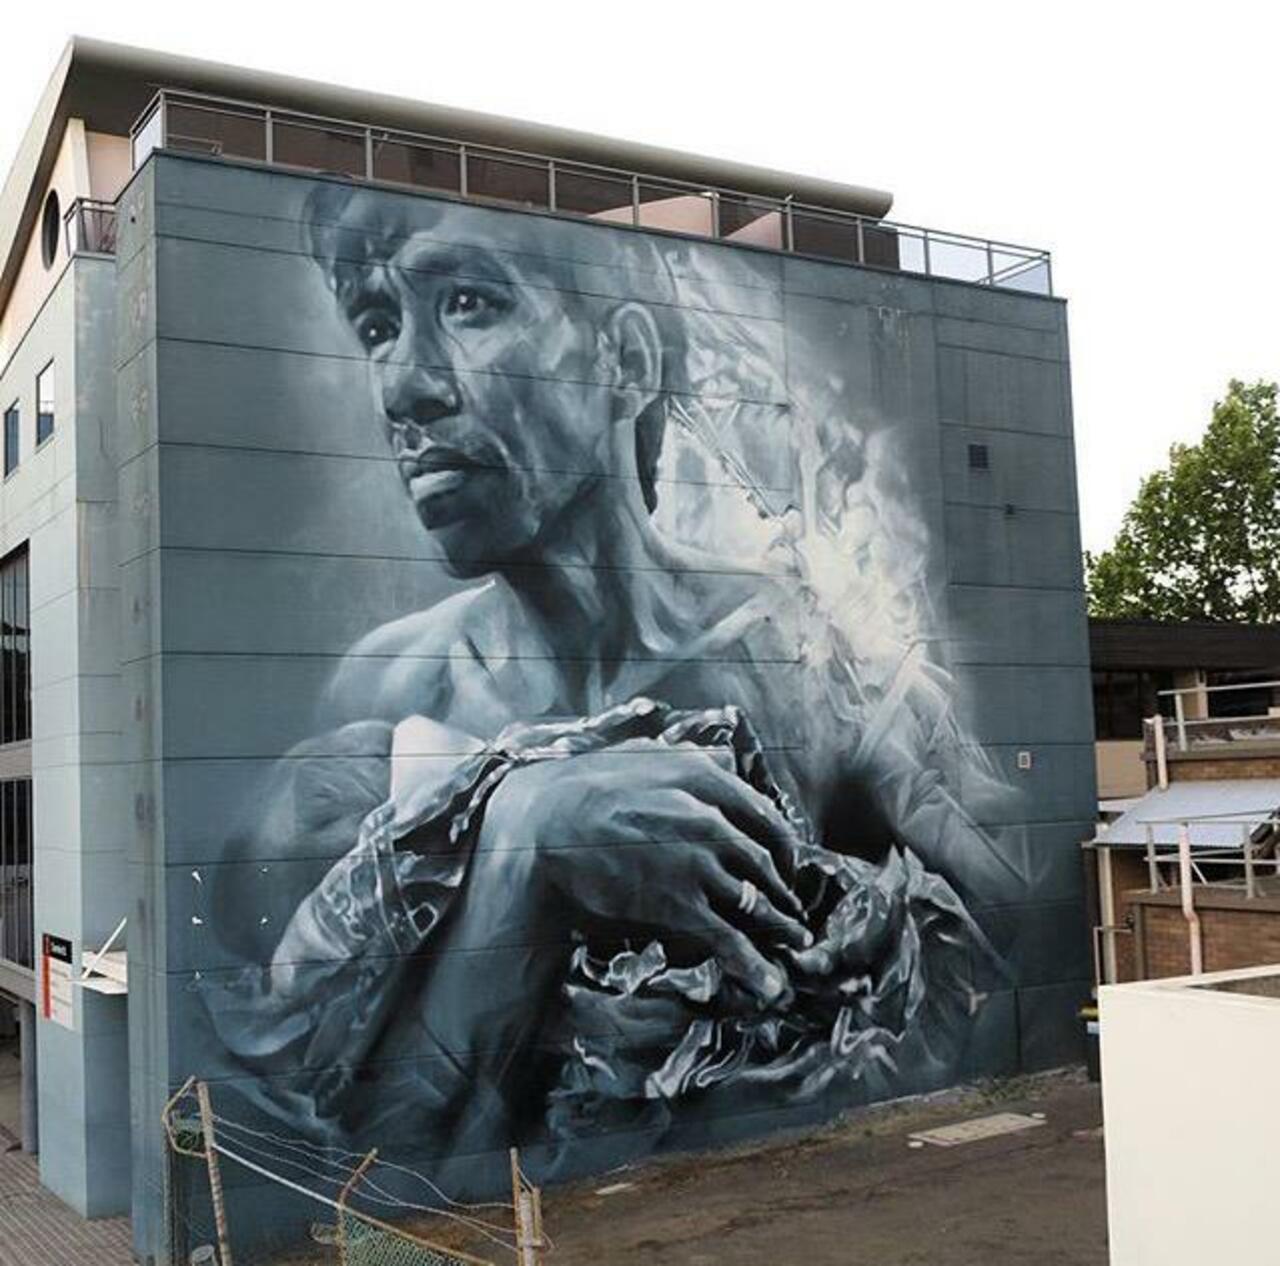 New Street Art by Guido Van Helten in Wollongong Australia 

#art #graffiti #mural #streetart http://t.co/pnJyf9RsfD